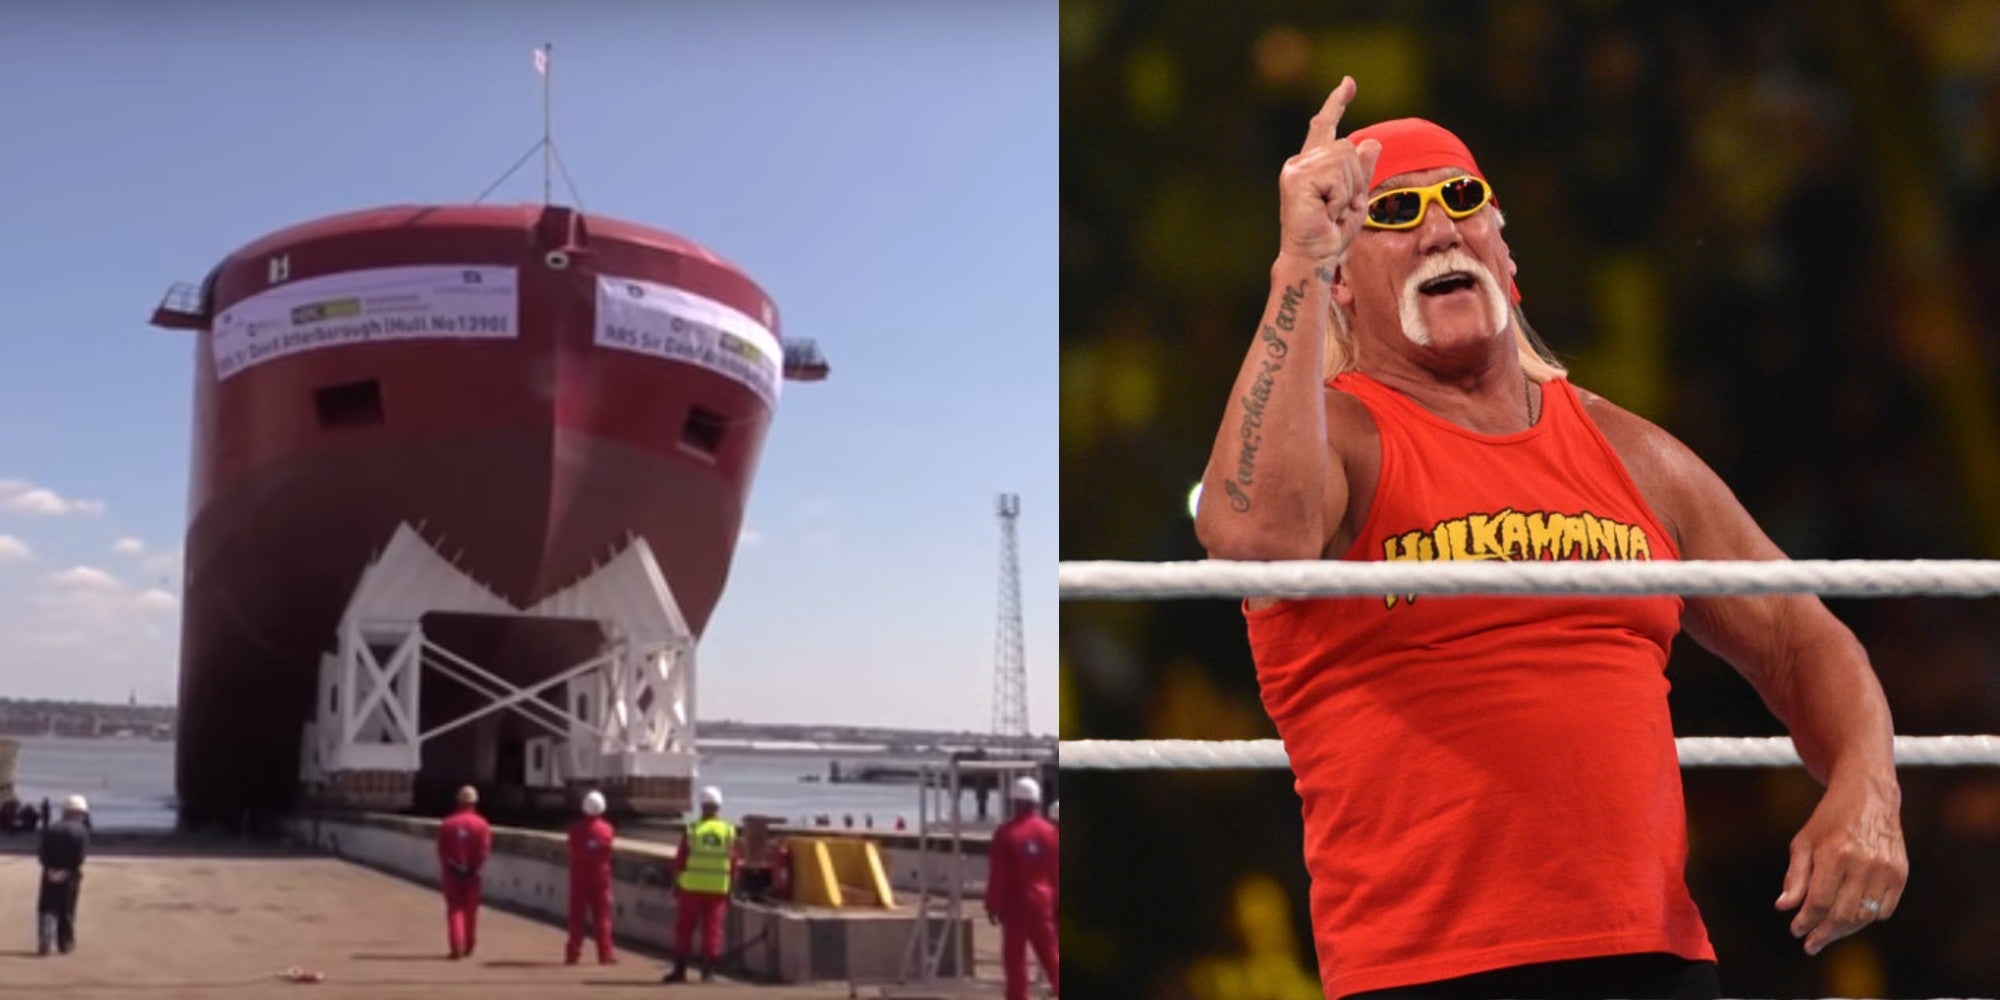 People Think The David Attenborough Boat Looks Just Like Hulk Hogan